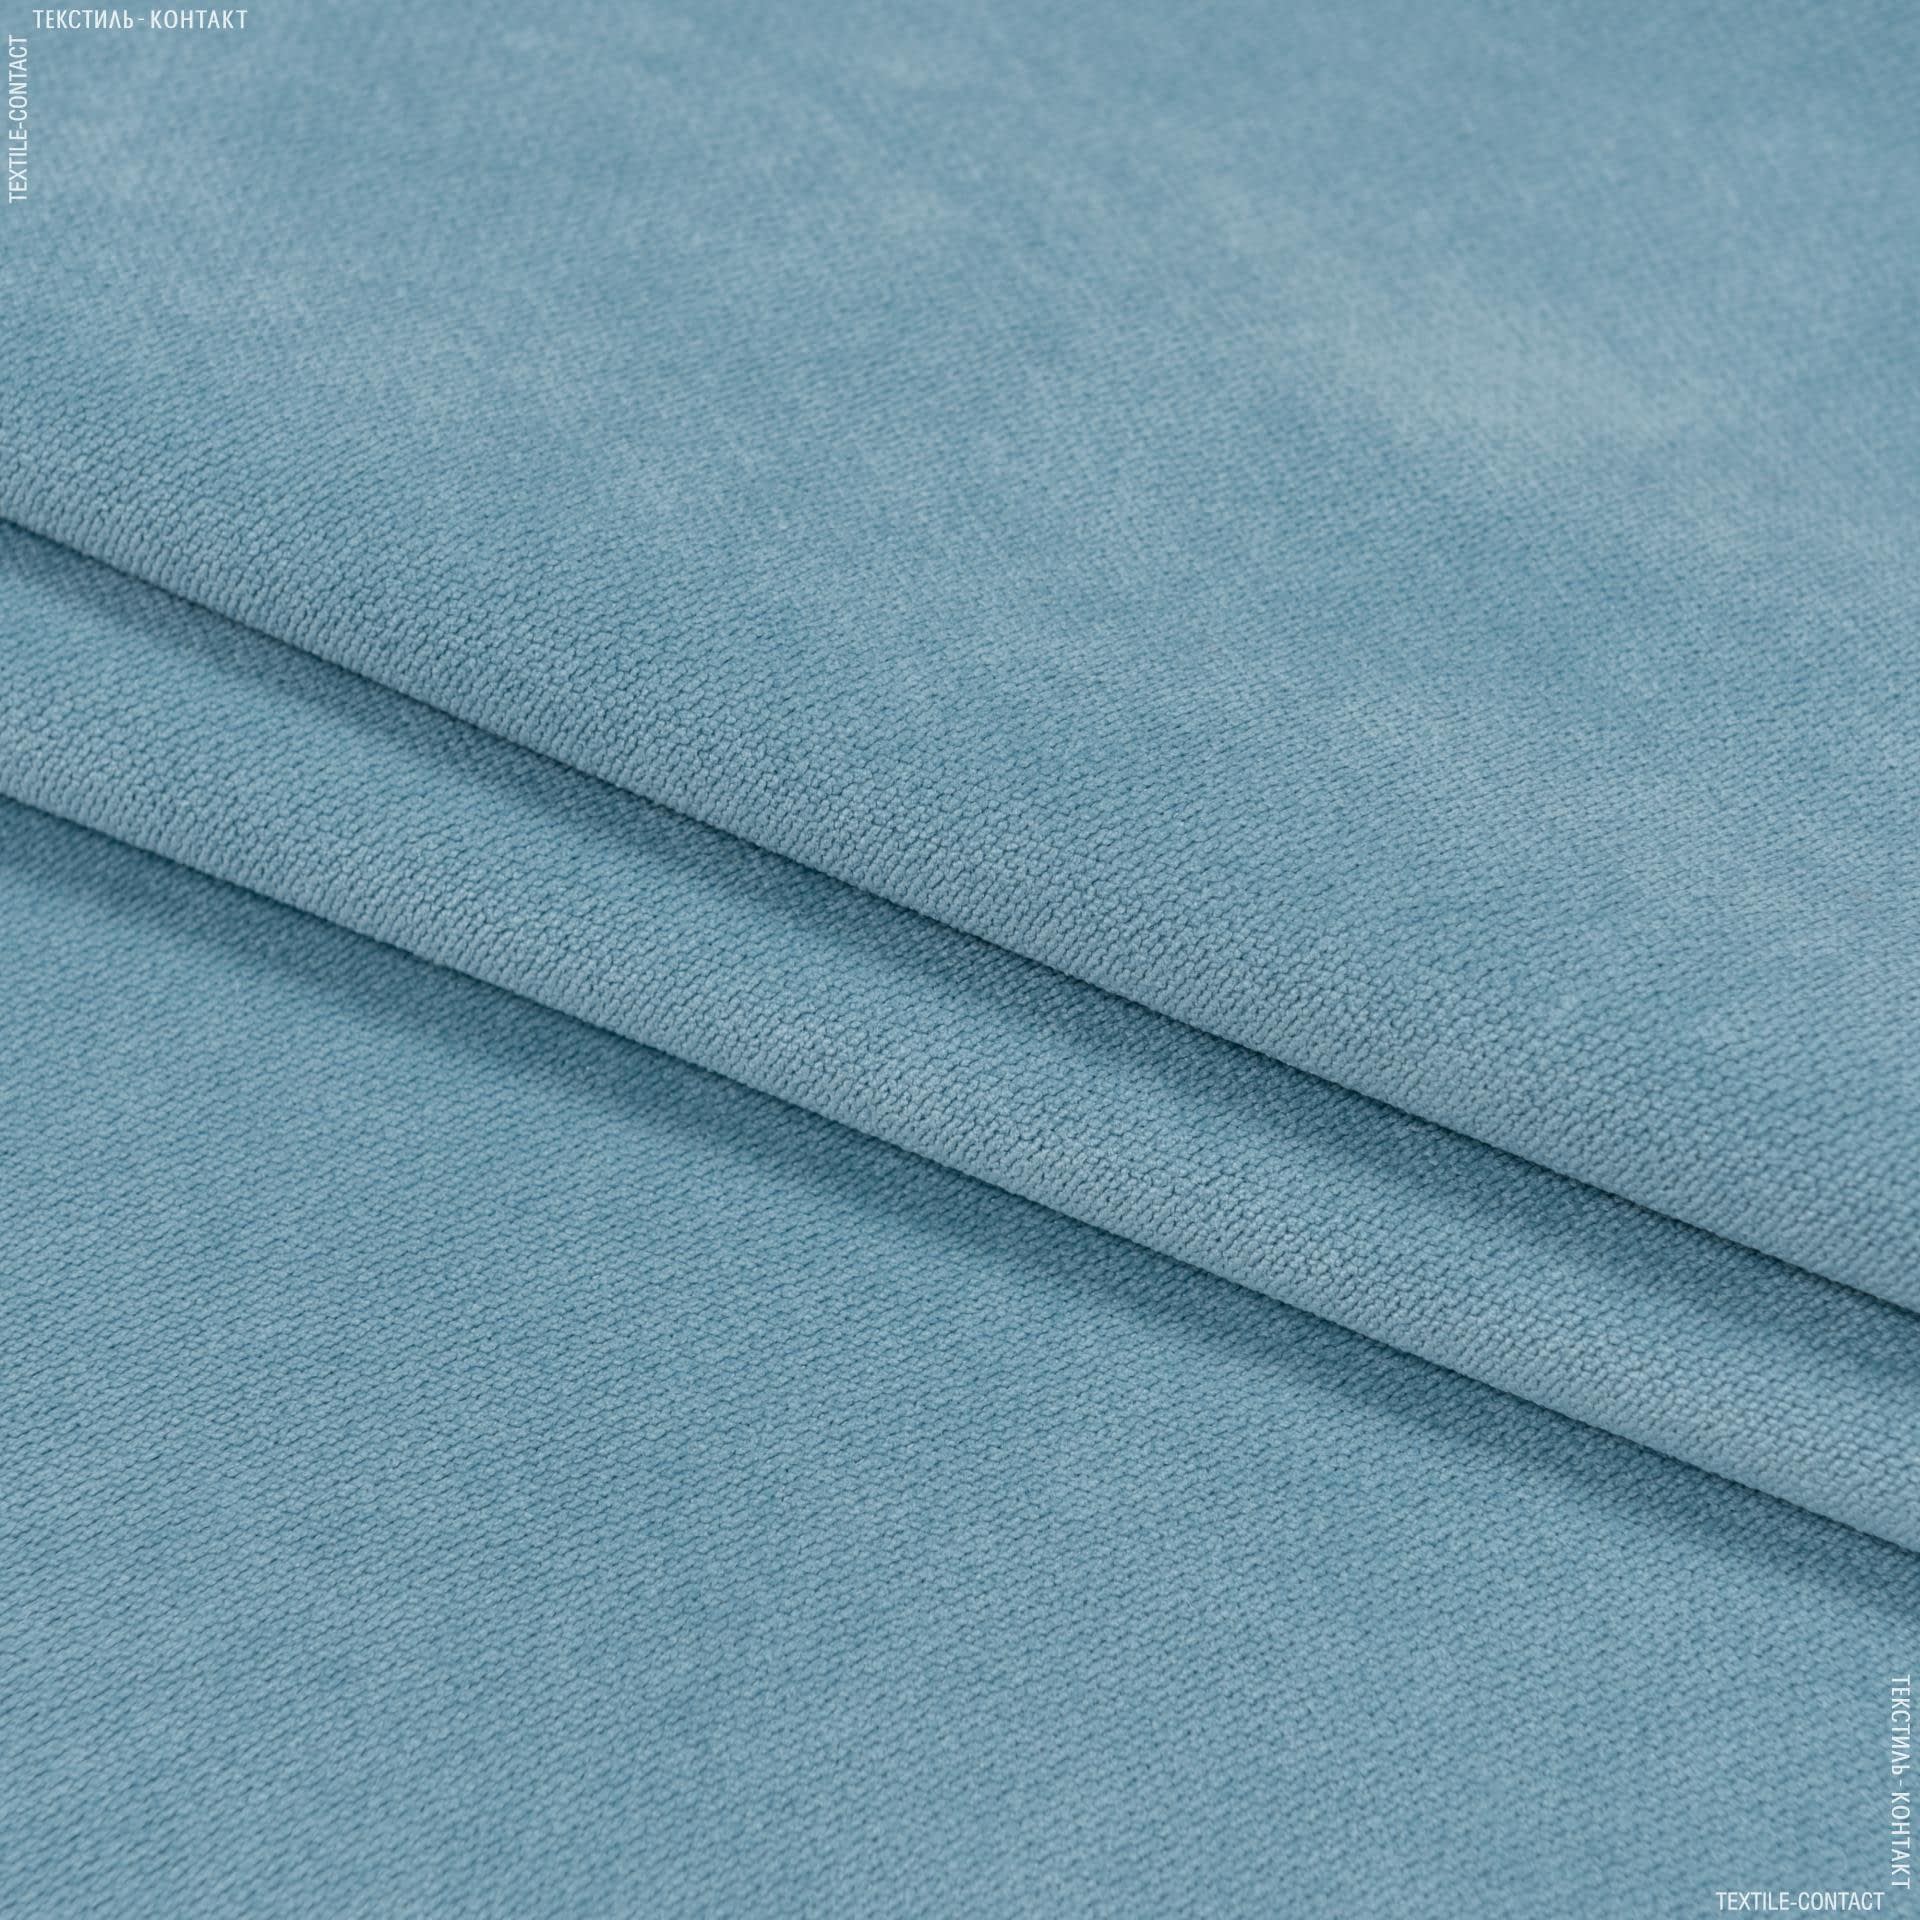 Тканини портьєрні тканини - Велюр Будапешт/BUDAPEST  блакитна крейда